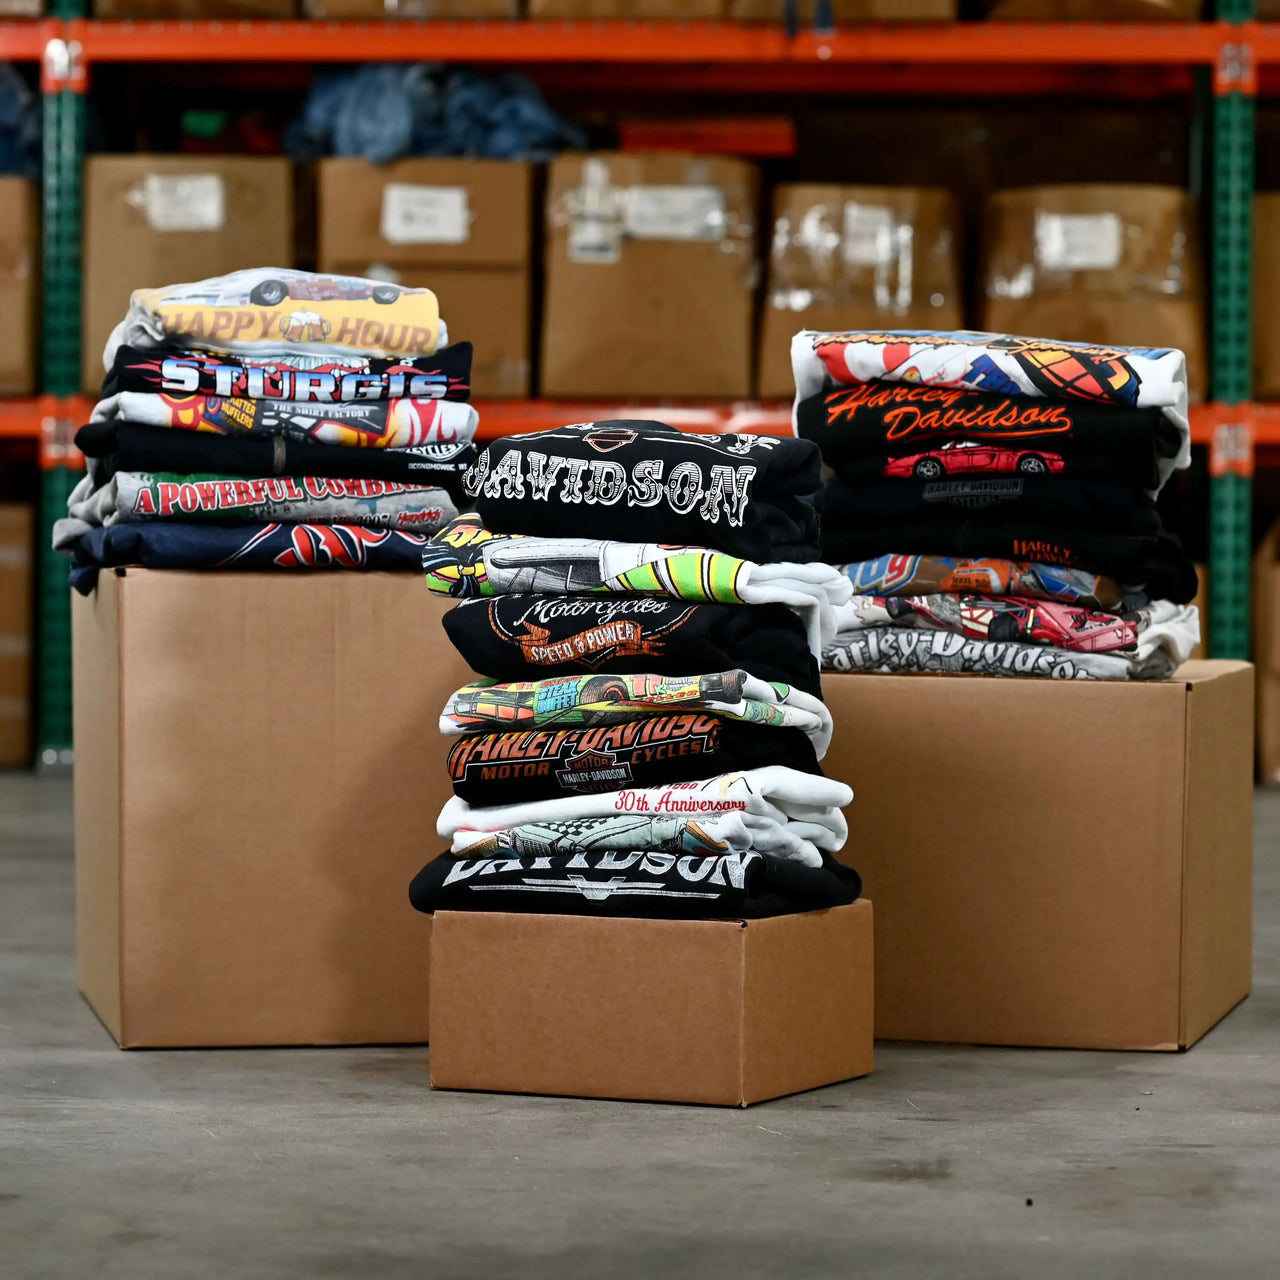 Wholesale Nascar/Racing/Harley Sweatshirts